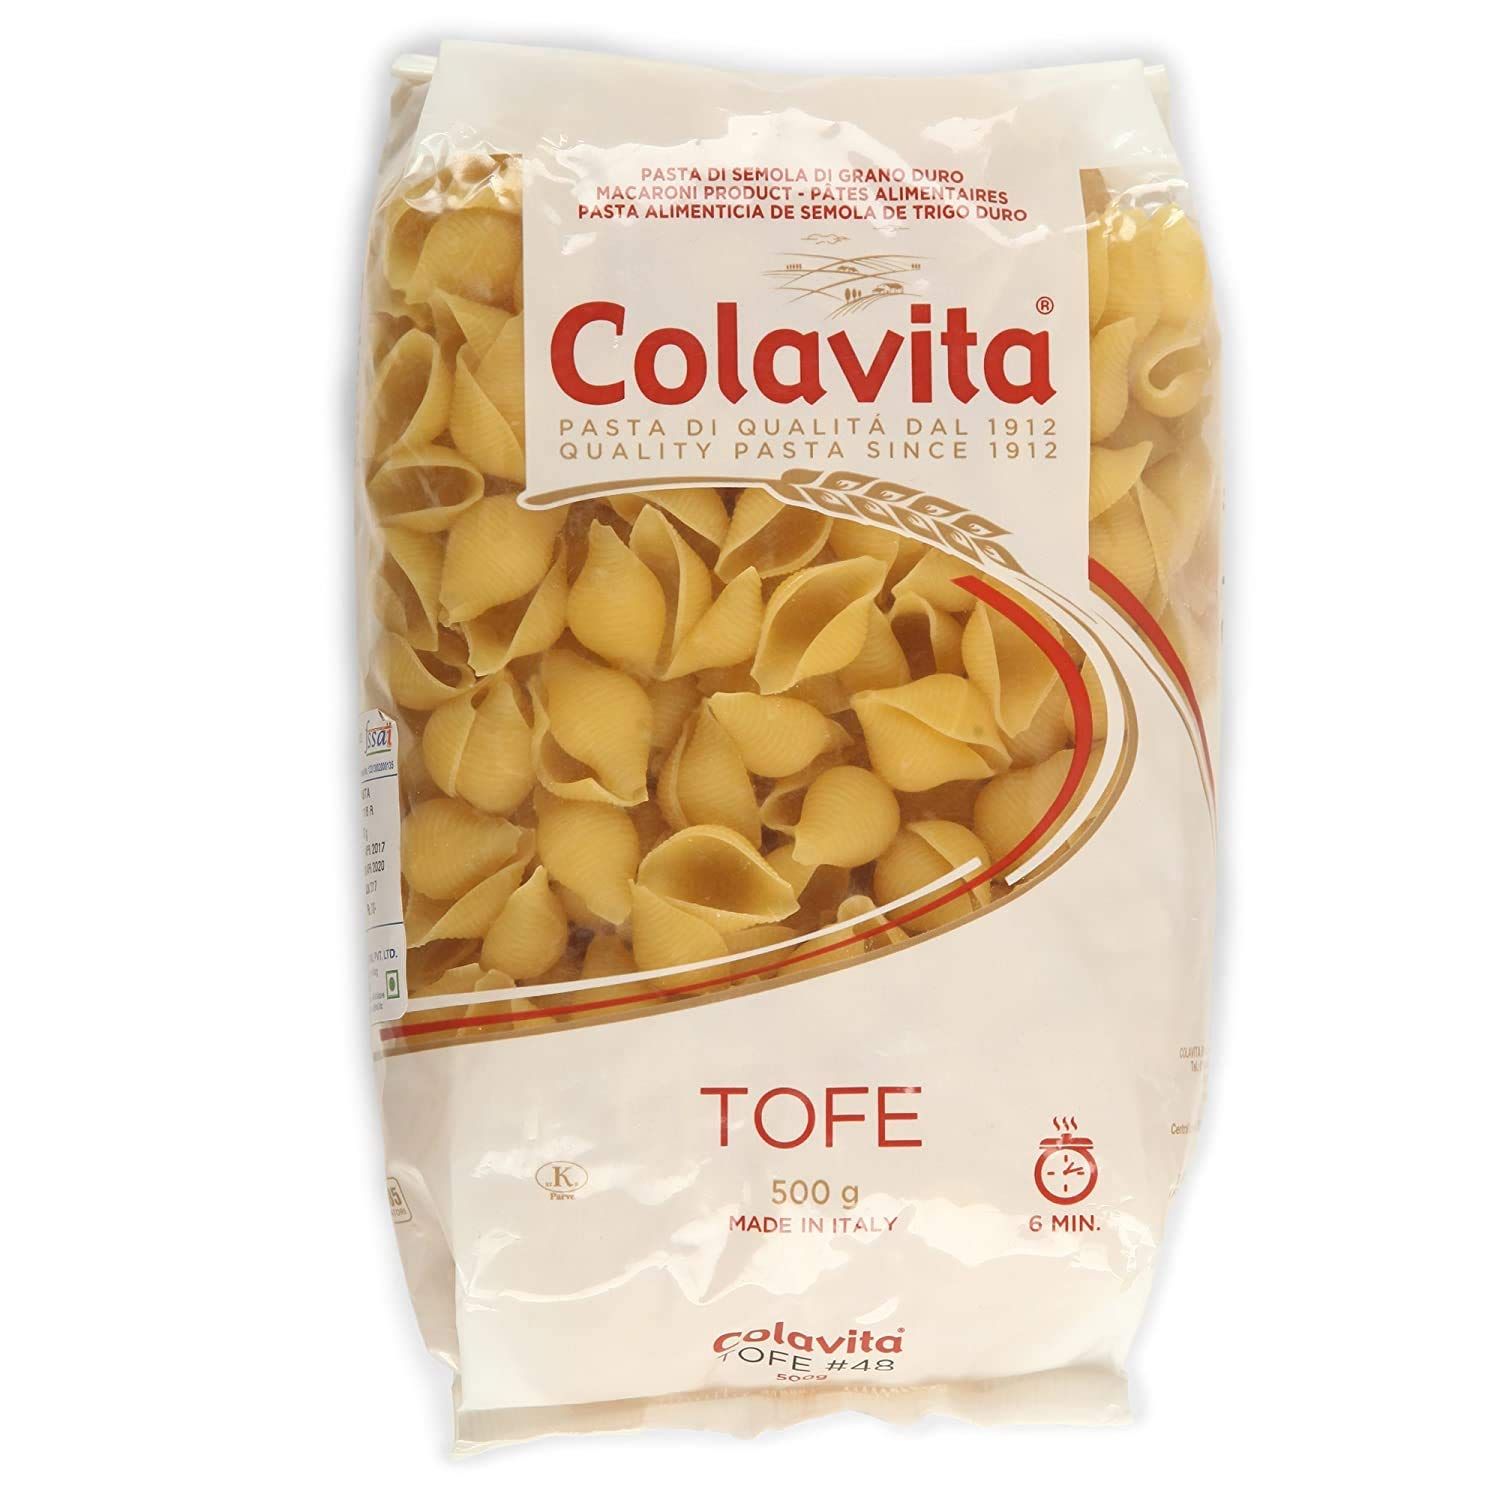 Colavita Tofe Pasta Image